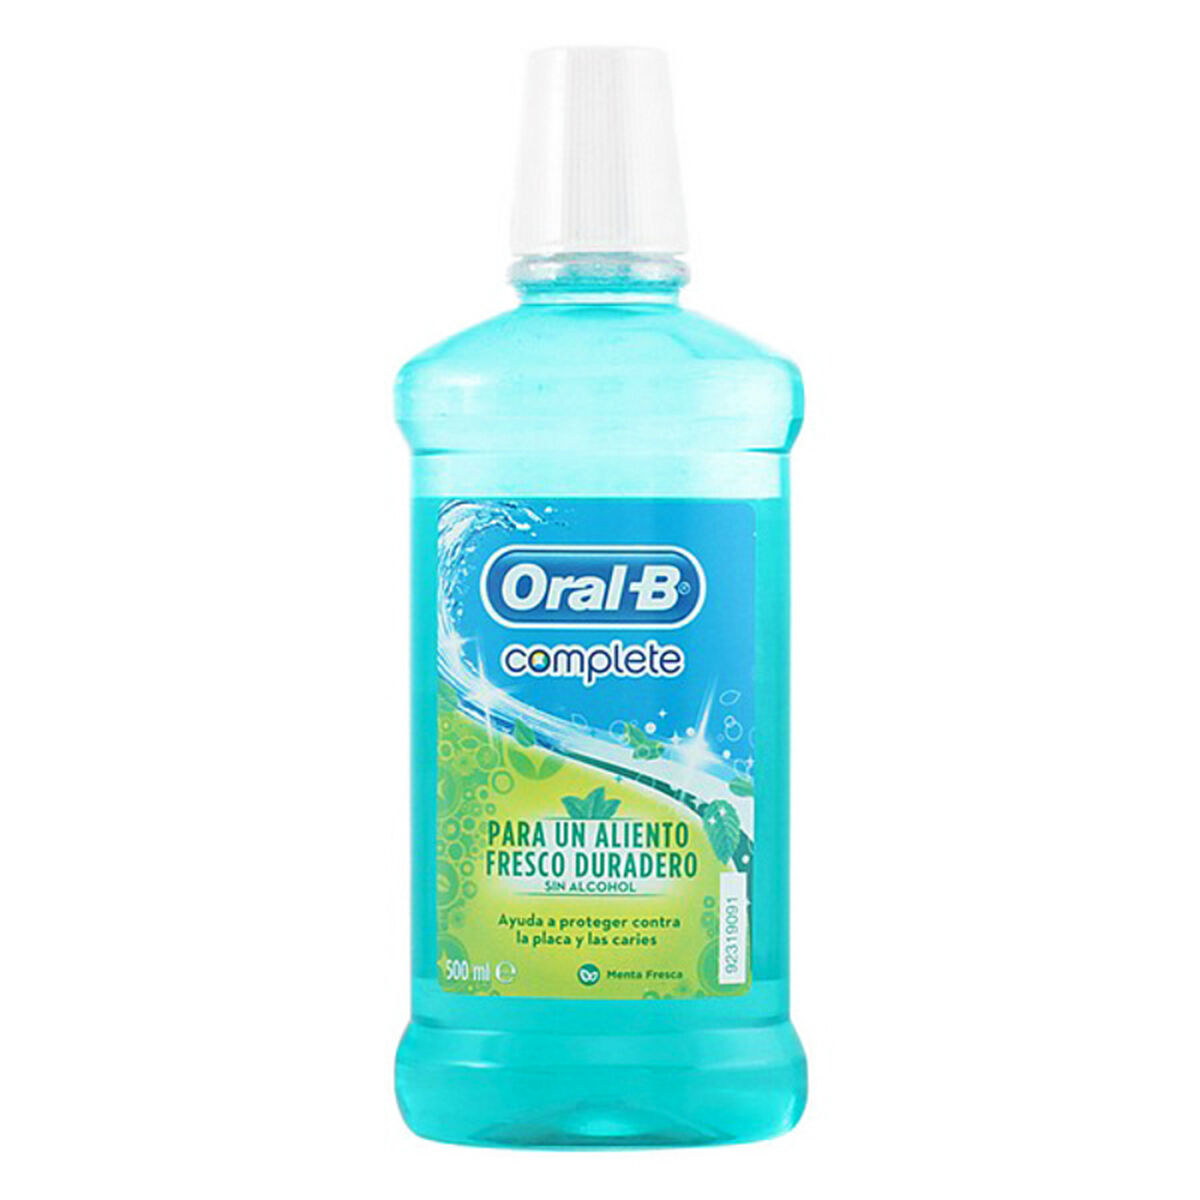 Enxaguatório bucal Oral-B 8470001673435 (500 ml) (500 ml)